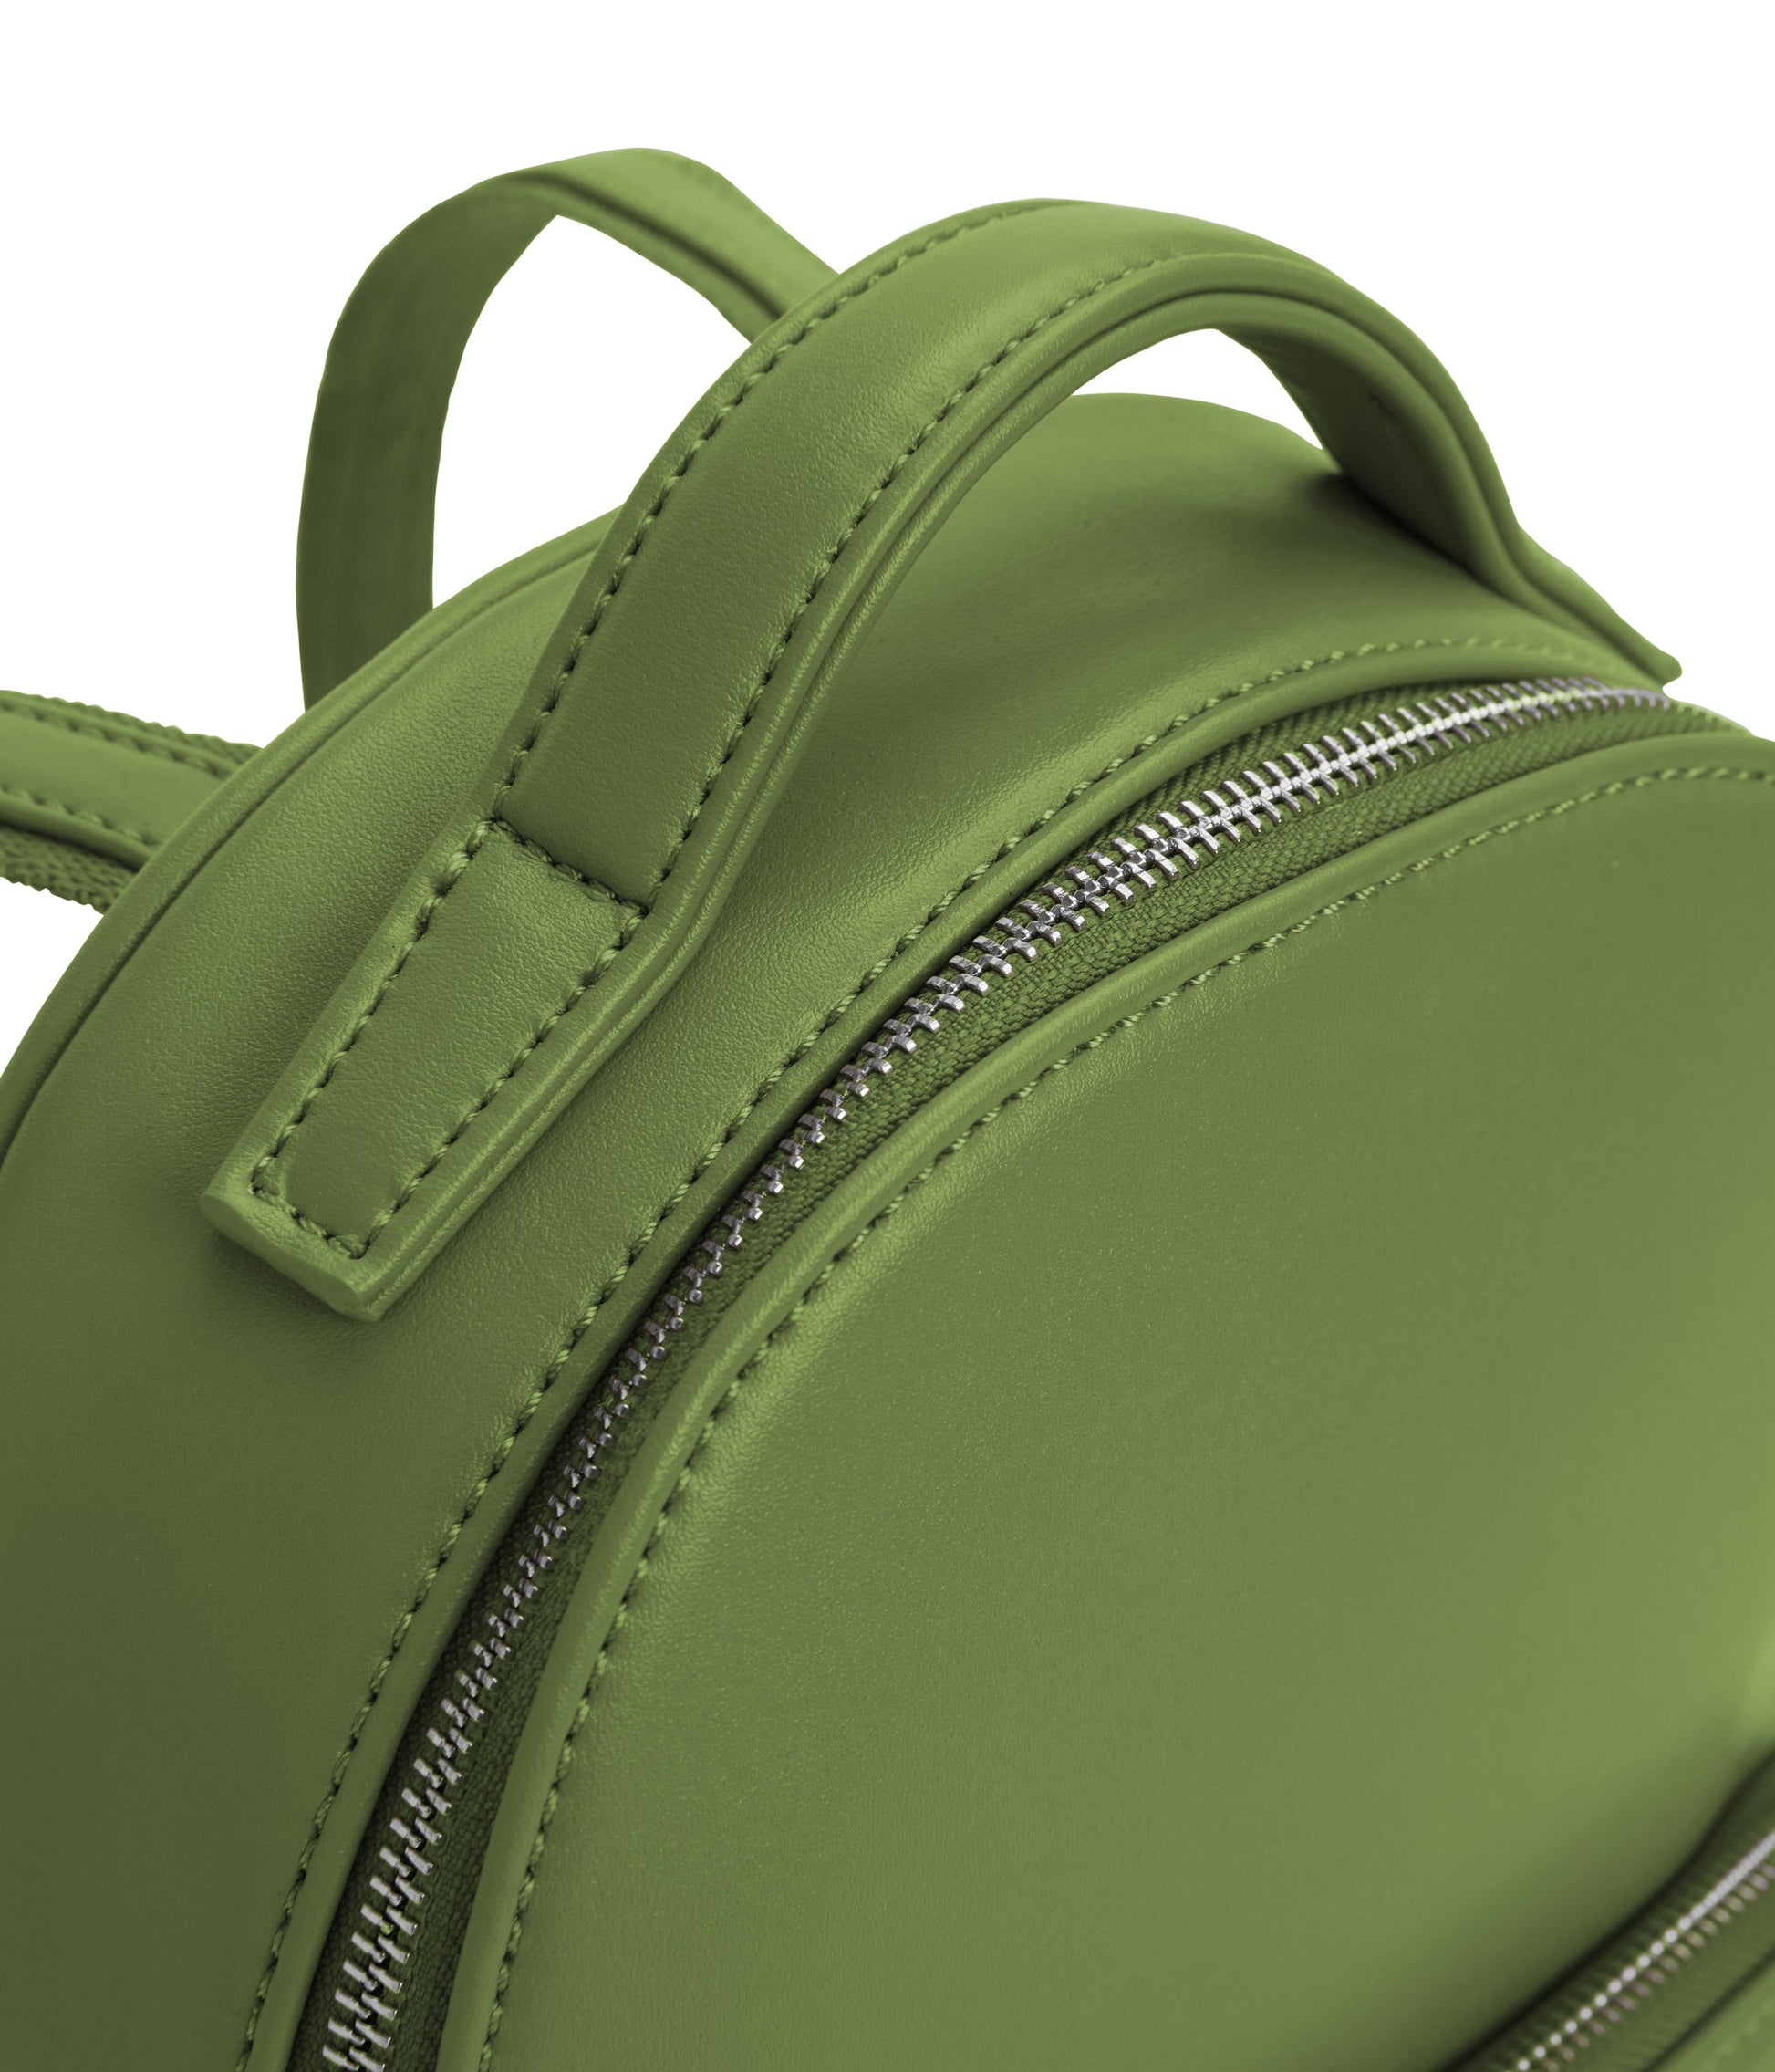 CAROSM Small Vegan Backpack - Loom | Color: Green - variant::parrot